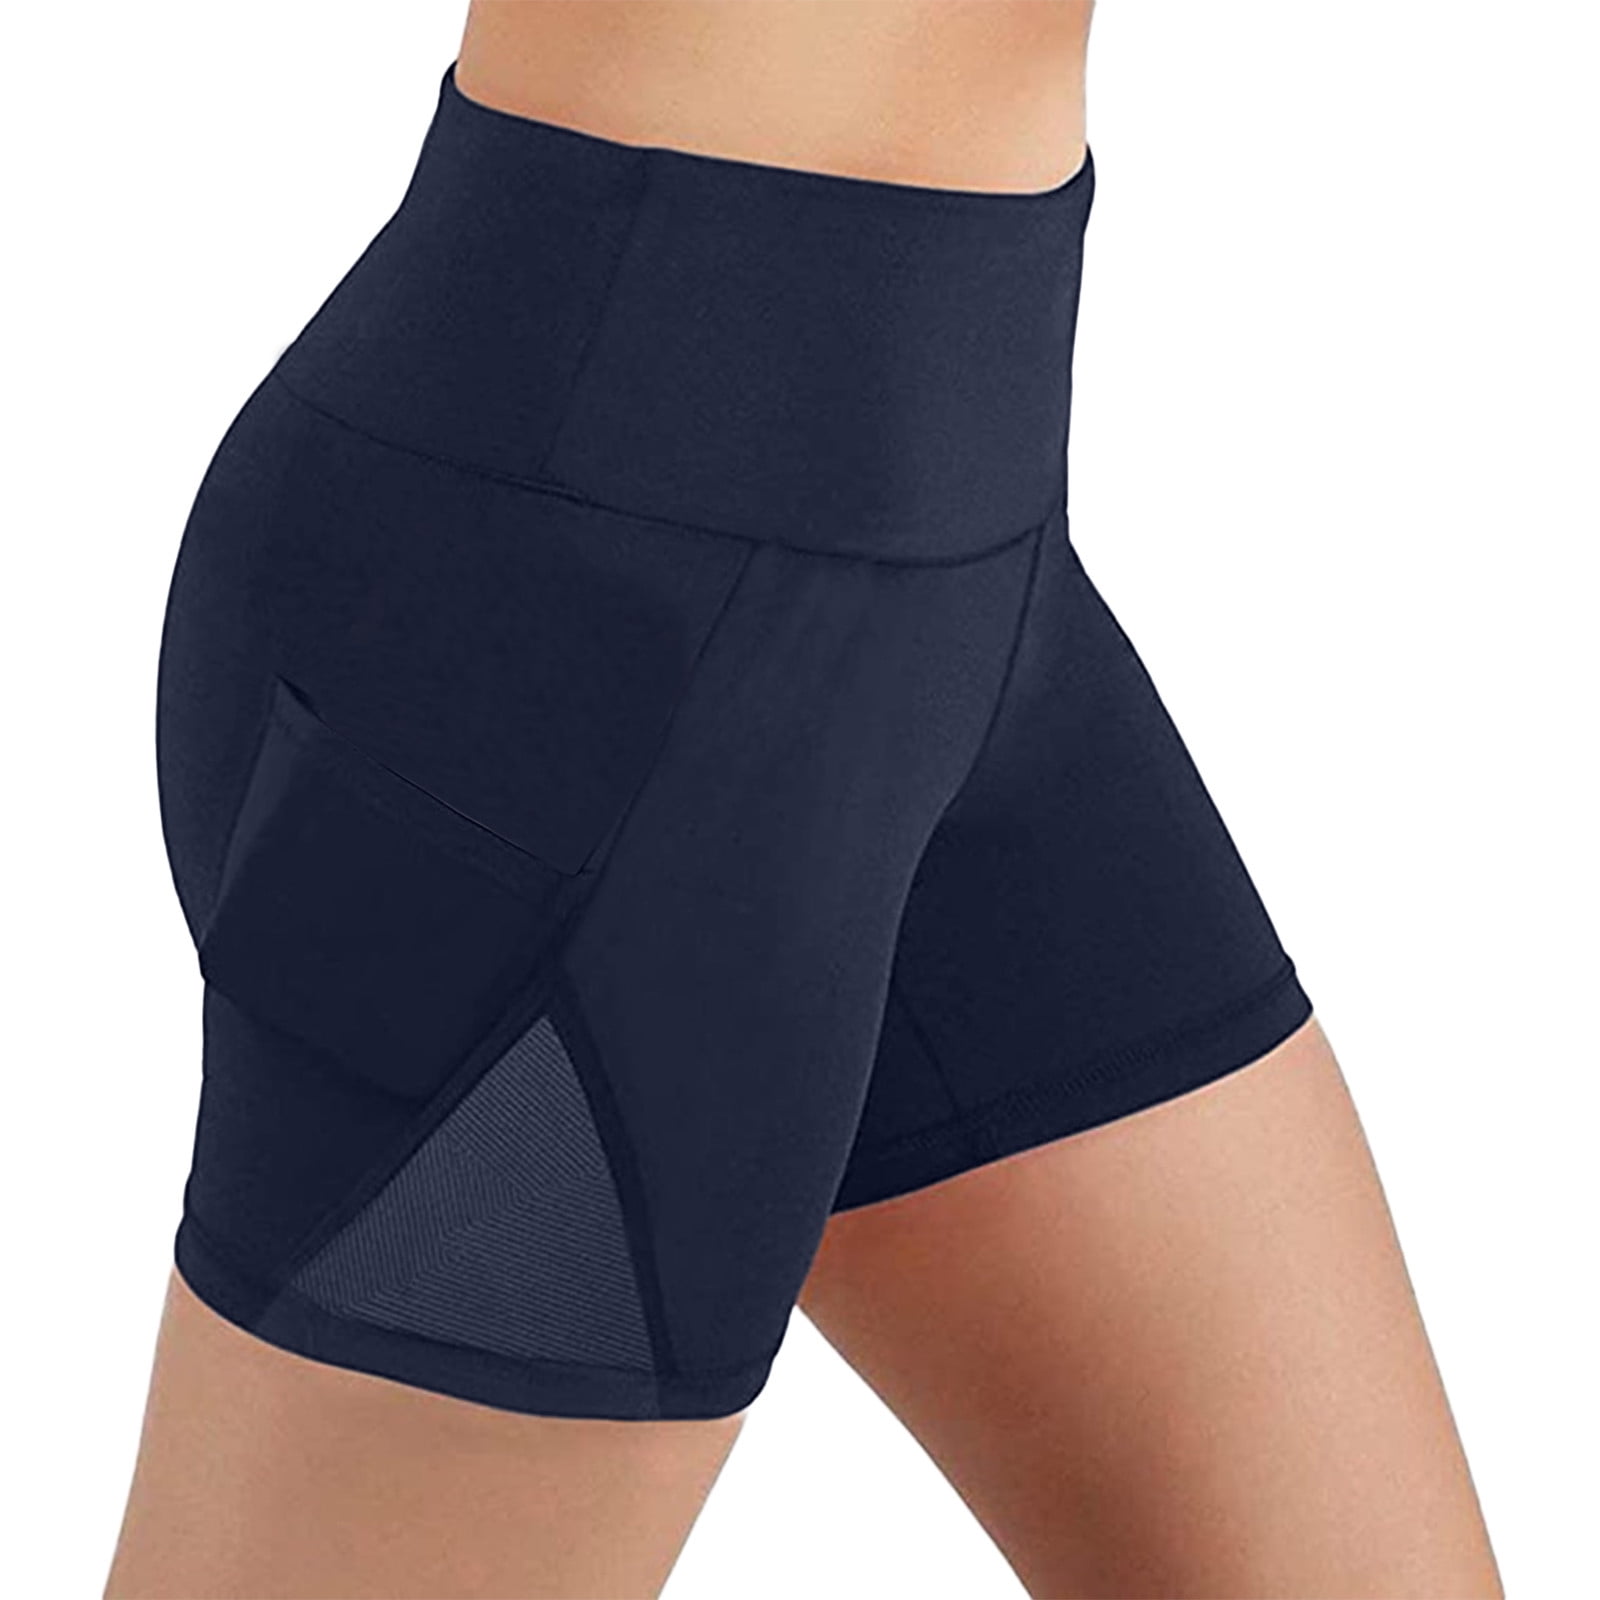 wofedyo Yoga Pants High Waist Solid Color Tight Fitness Hidden Yoga Pants  Sweatpants Women Crz Yoga Leggings 